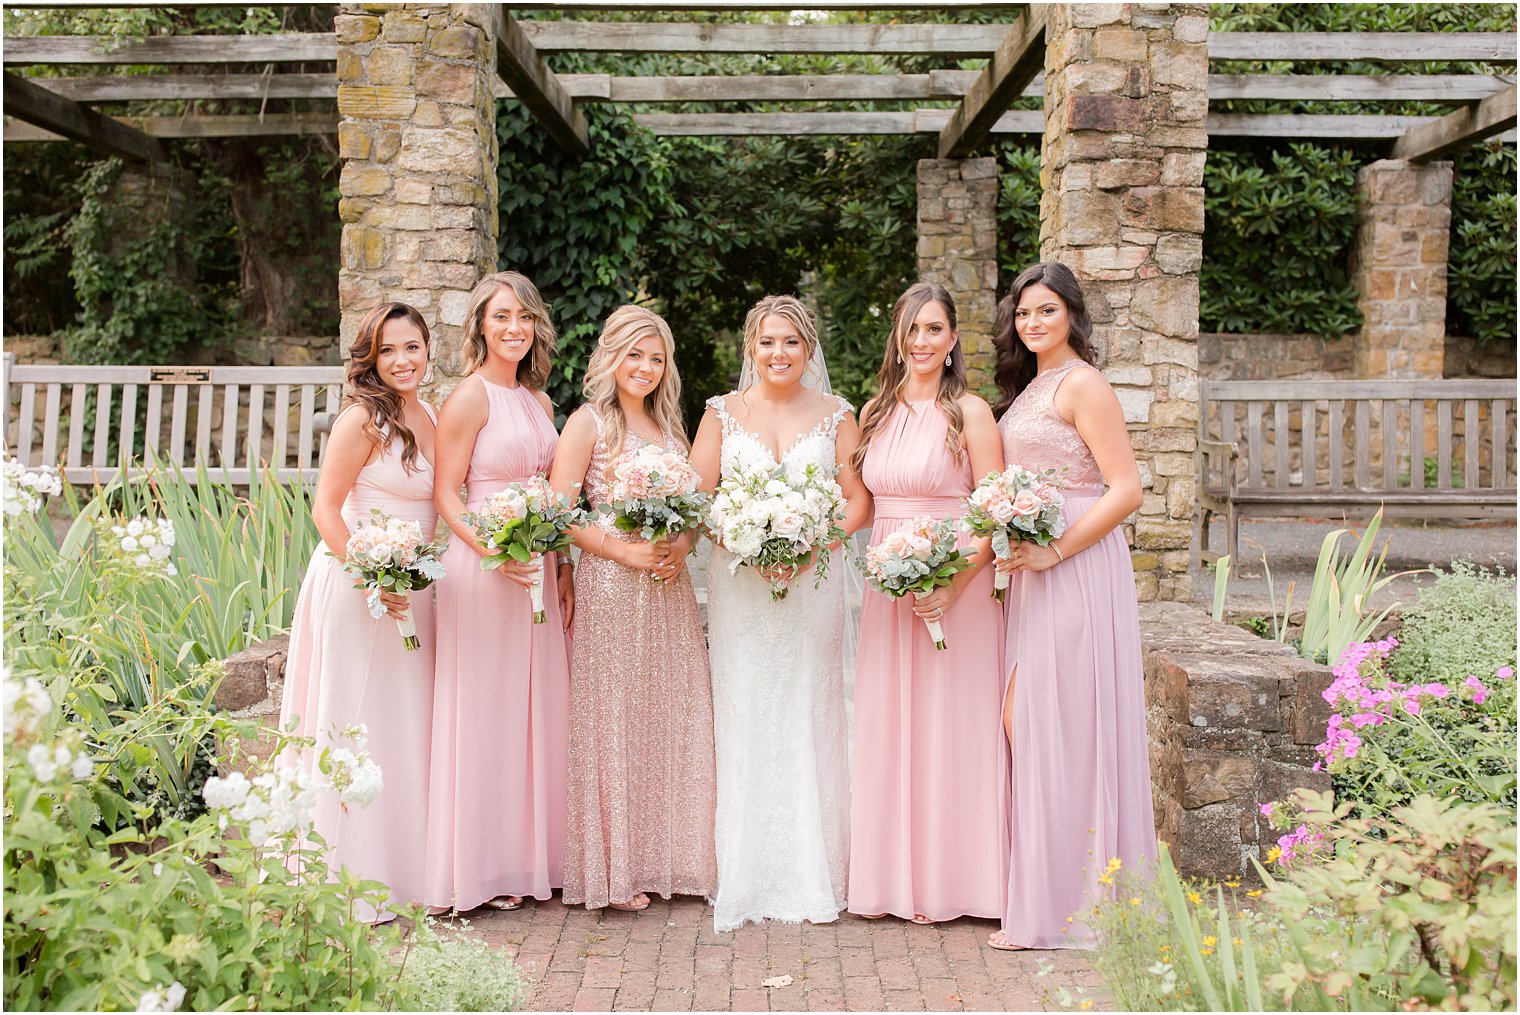 Bridesmaids wearing pink at Cross Estate Gardens for an Olde Mill Inn wedding